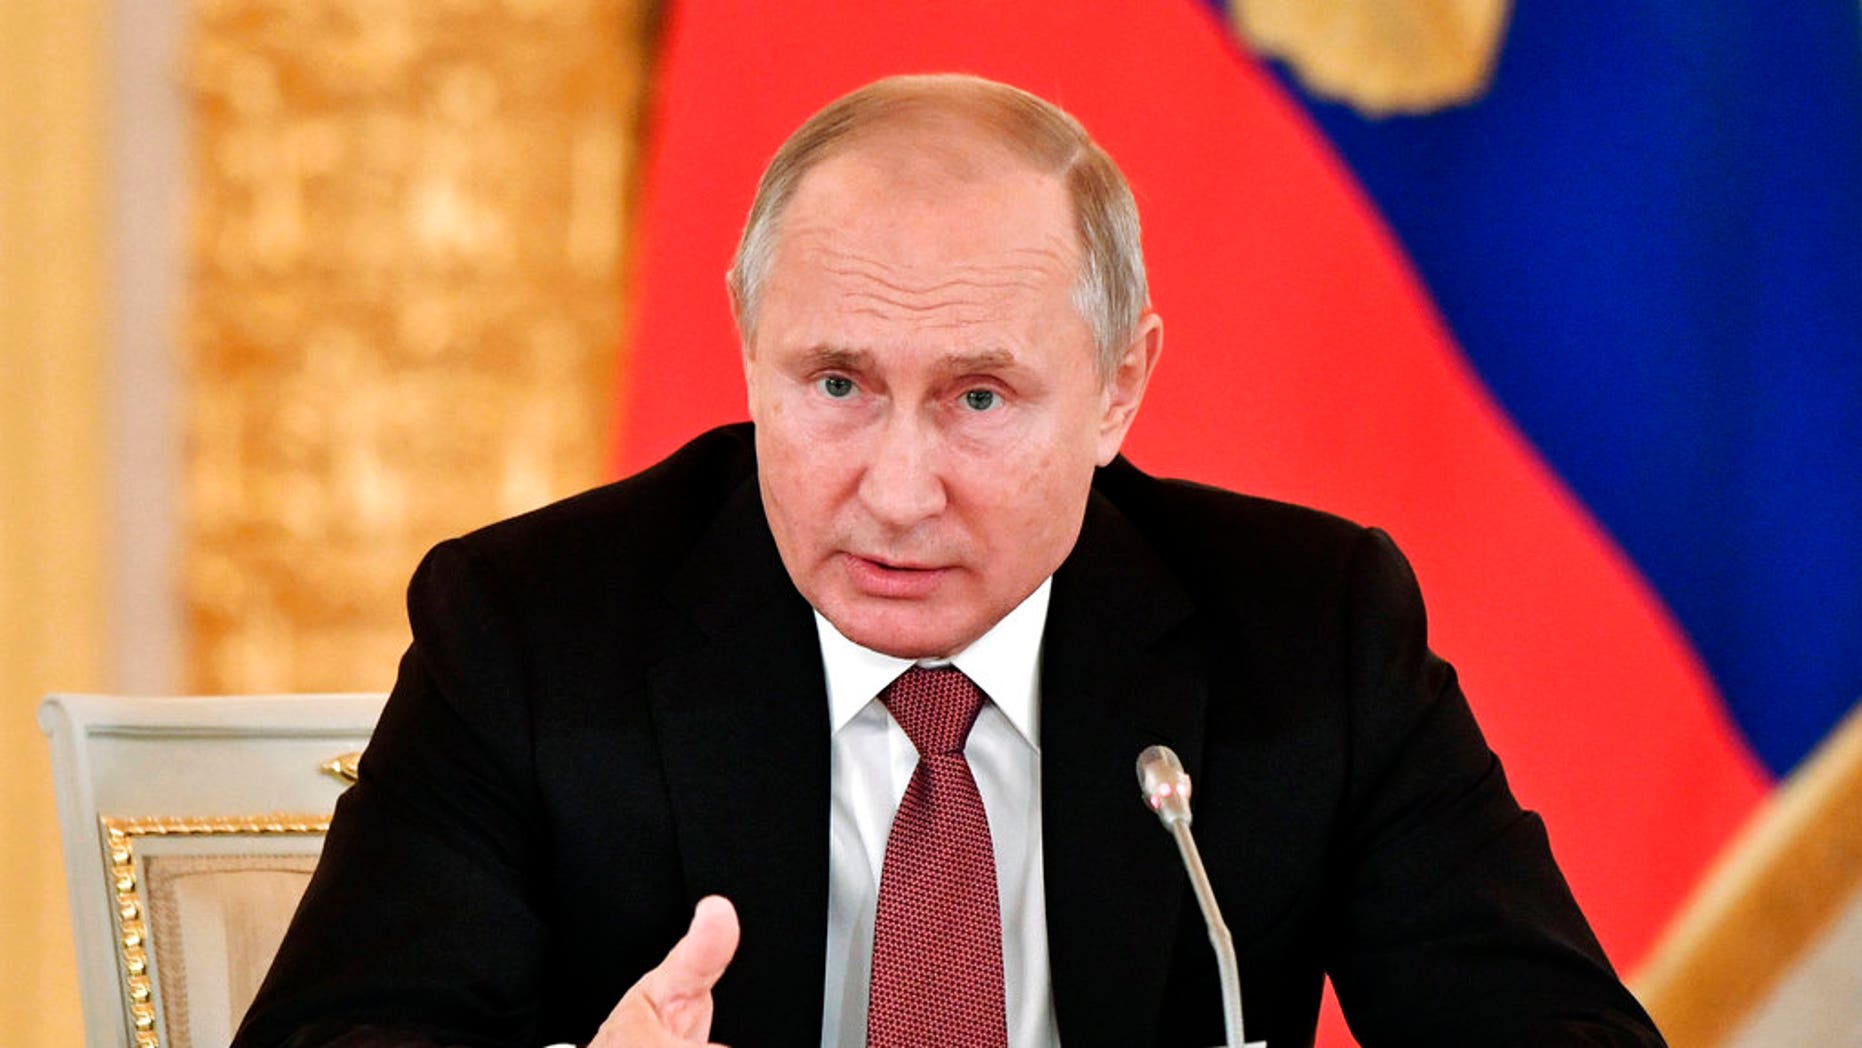 Trump Putin Meeting At G 20 Summit Is A Go Kremlin Official Confirms Report Fox News 2639